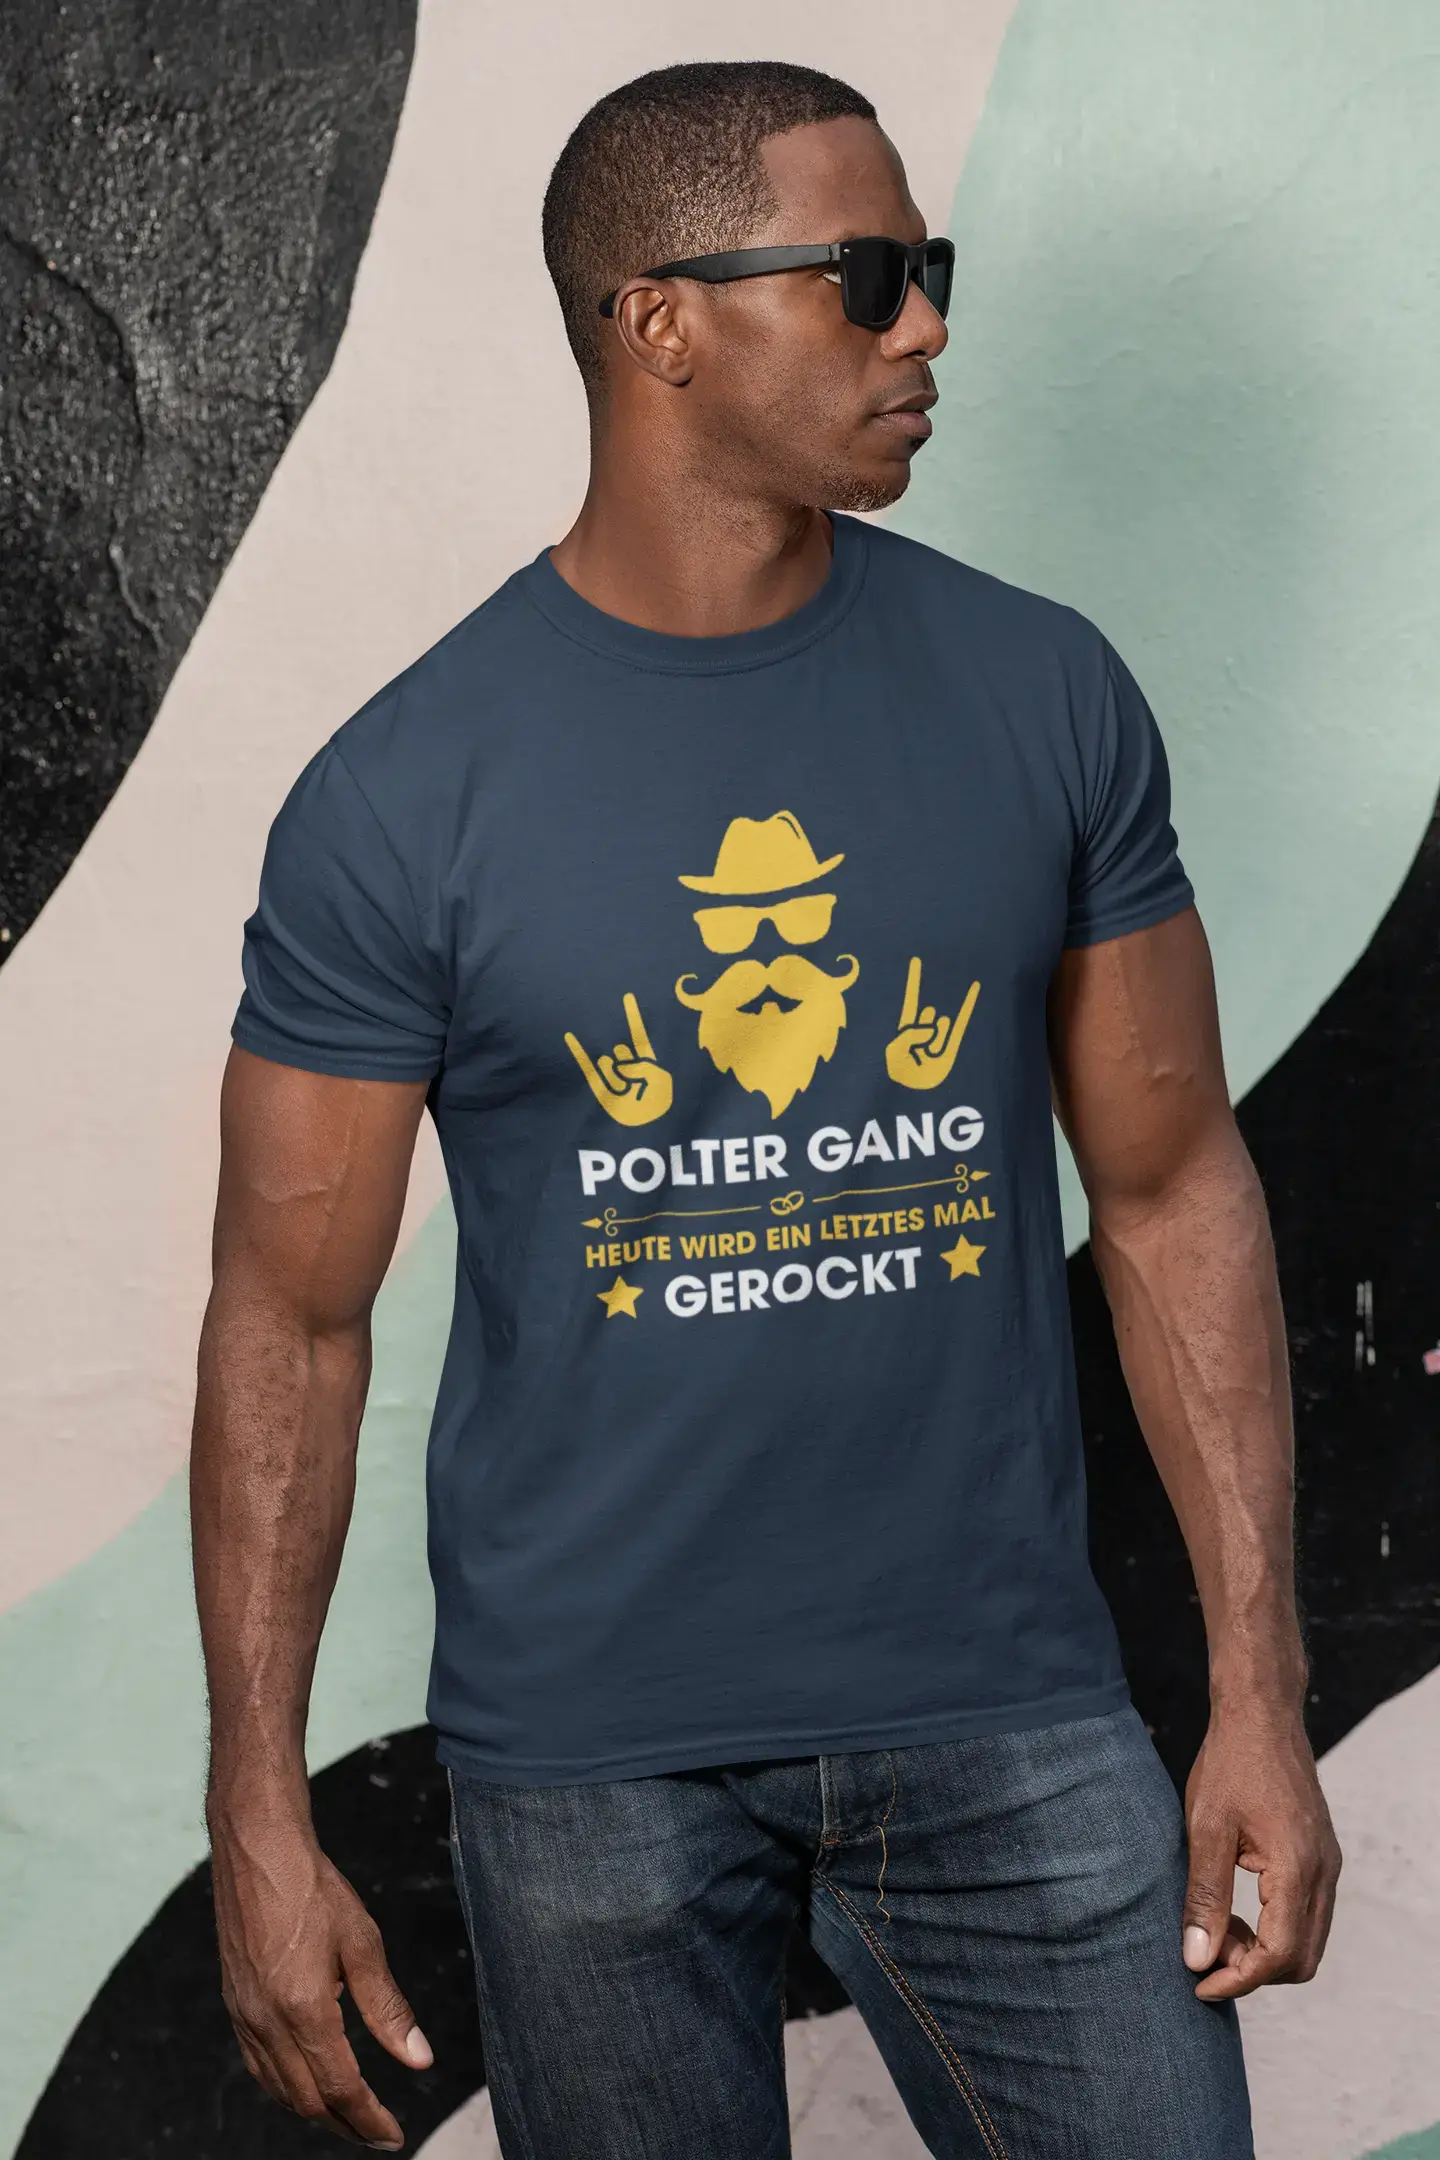 <span>Herren</span> <span>Grafik</span> T-Shirt Polter Gang Gerockt Idee <span>Geschenk</span>